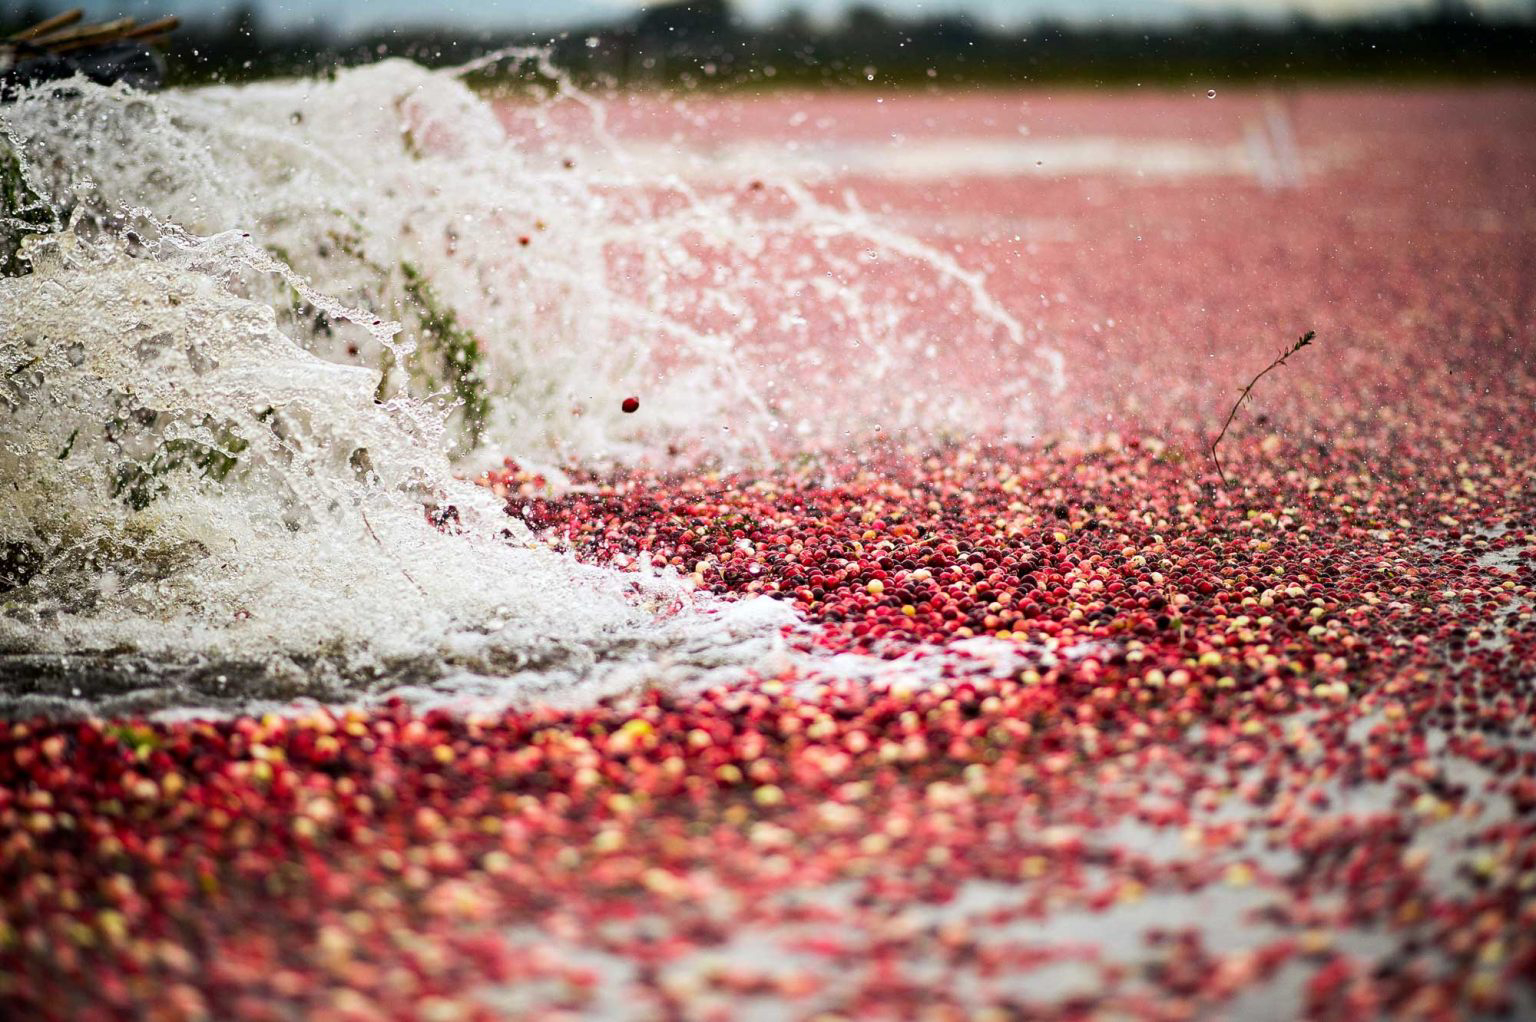 Splashes disrupting a bog filled with cranberries.